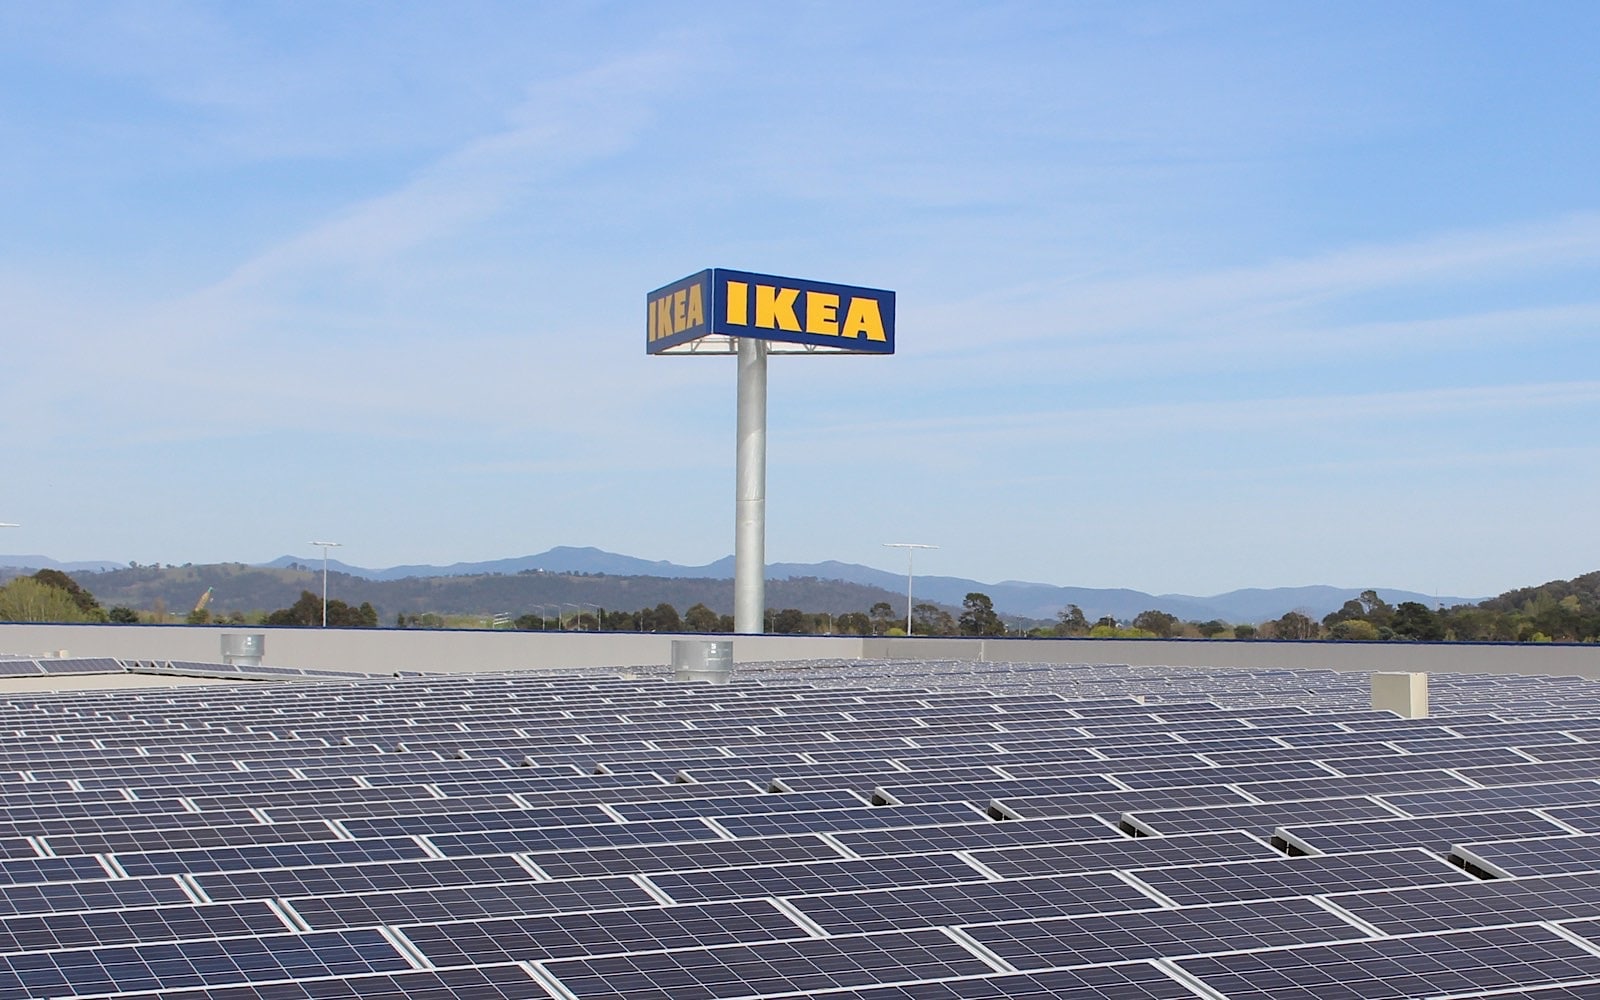 Solar panels at IKEA